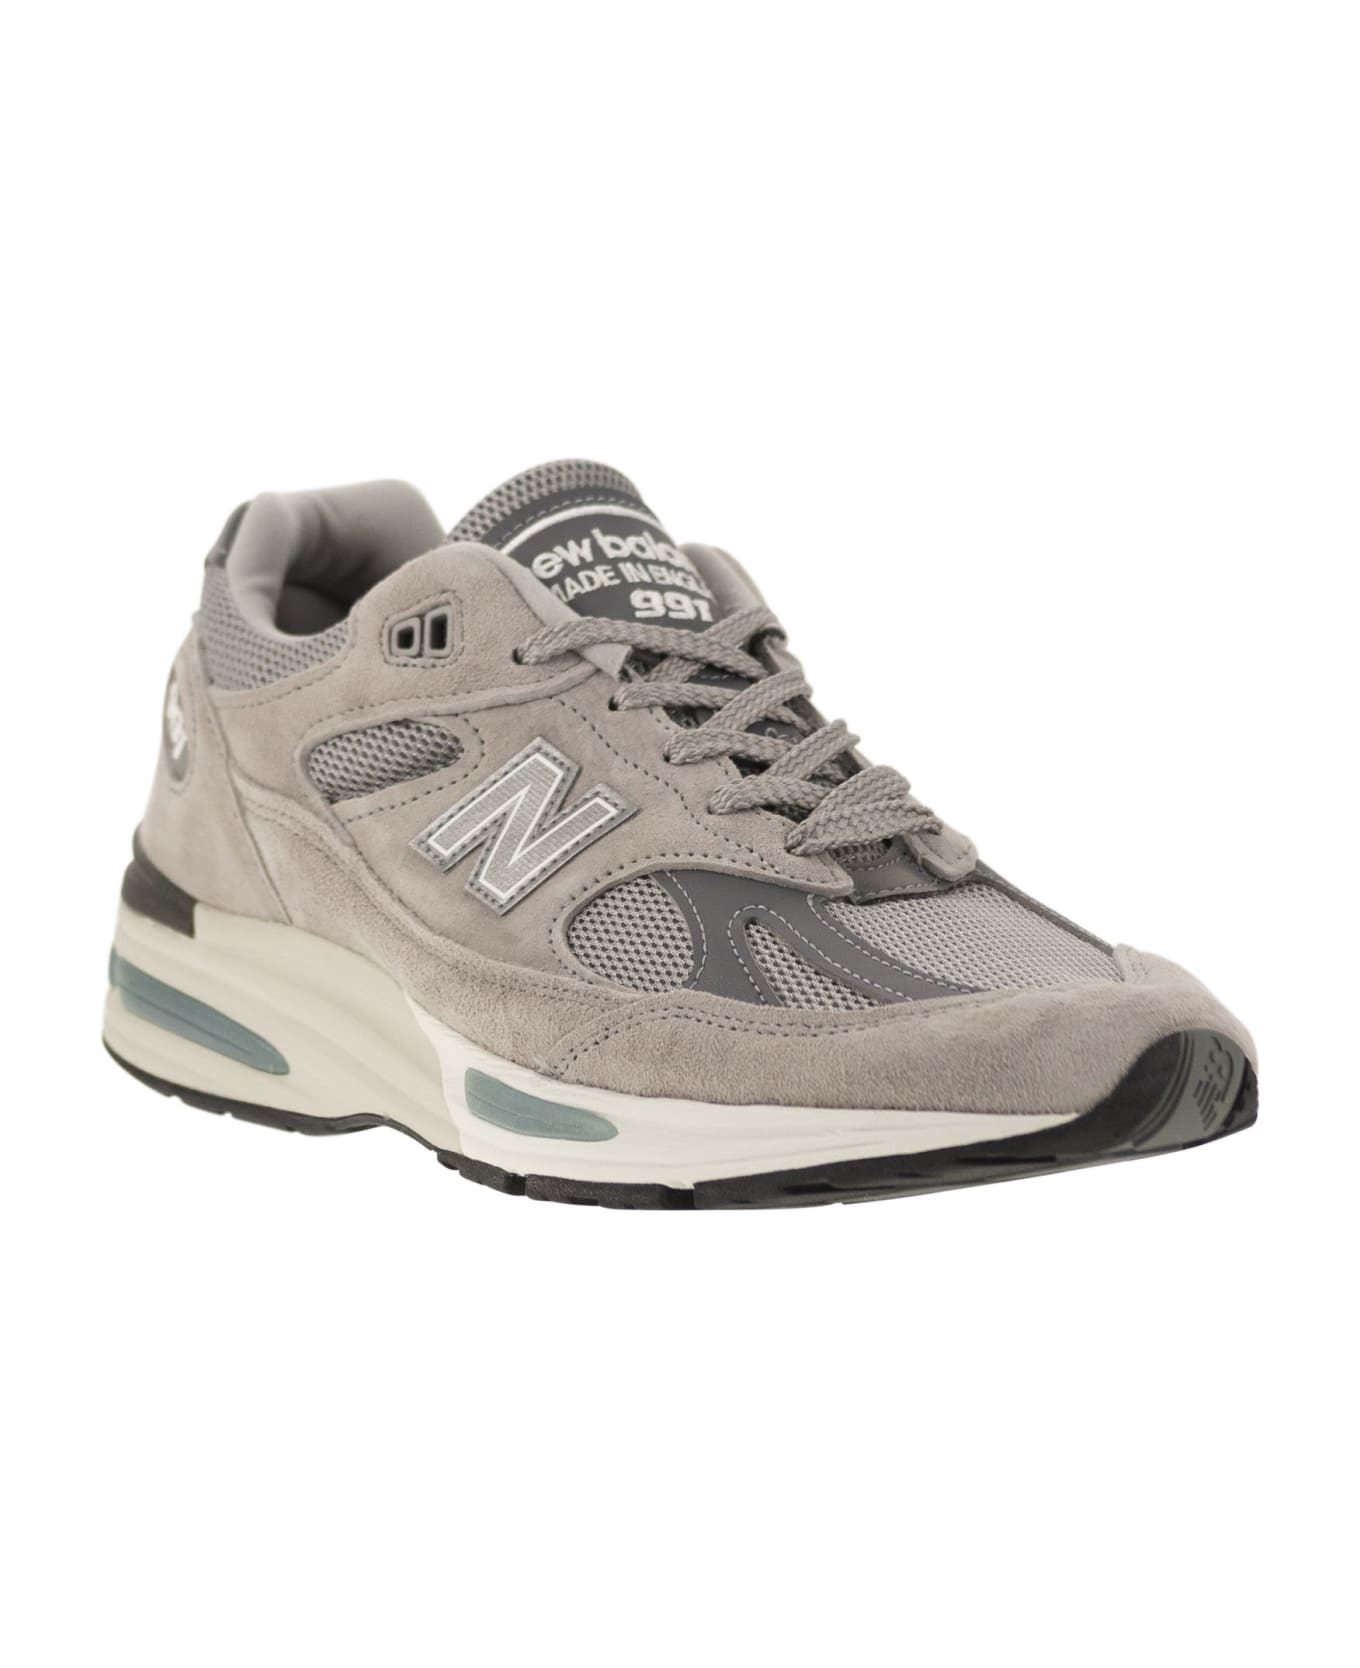 New Balance 991v1 - Sneakers - Grey